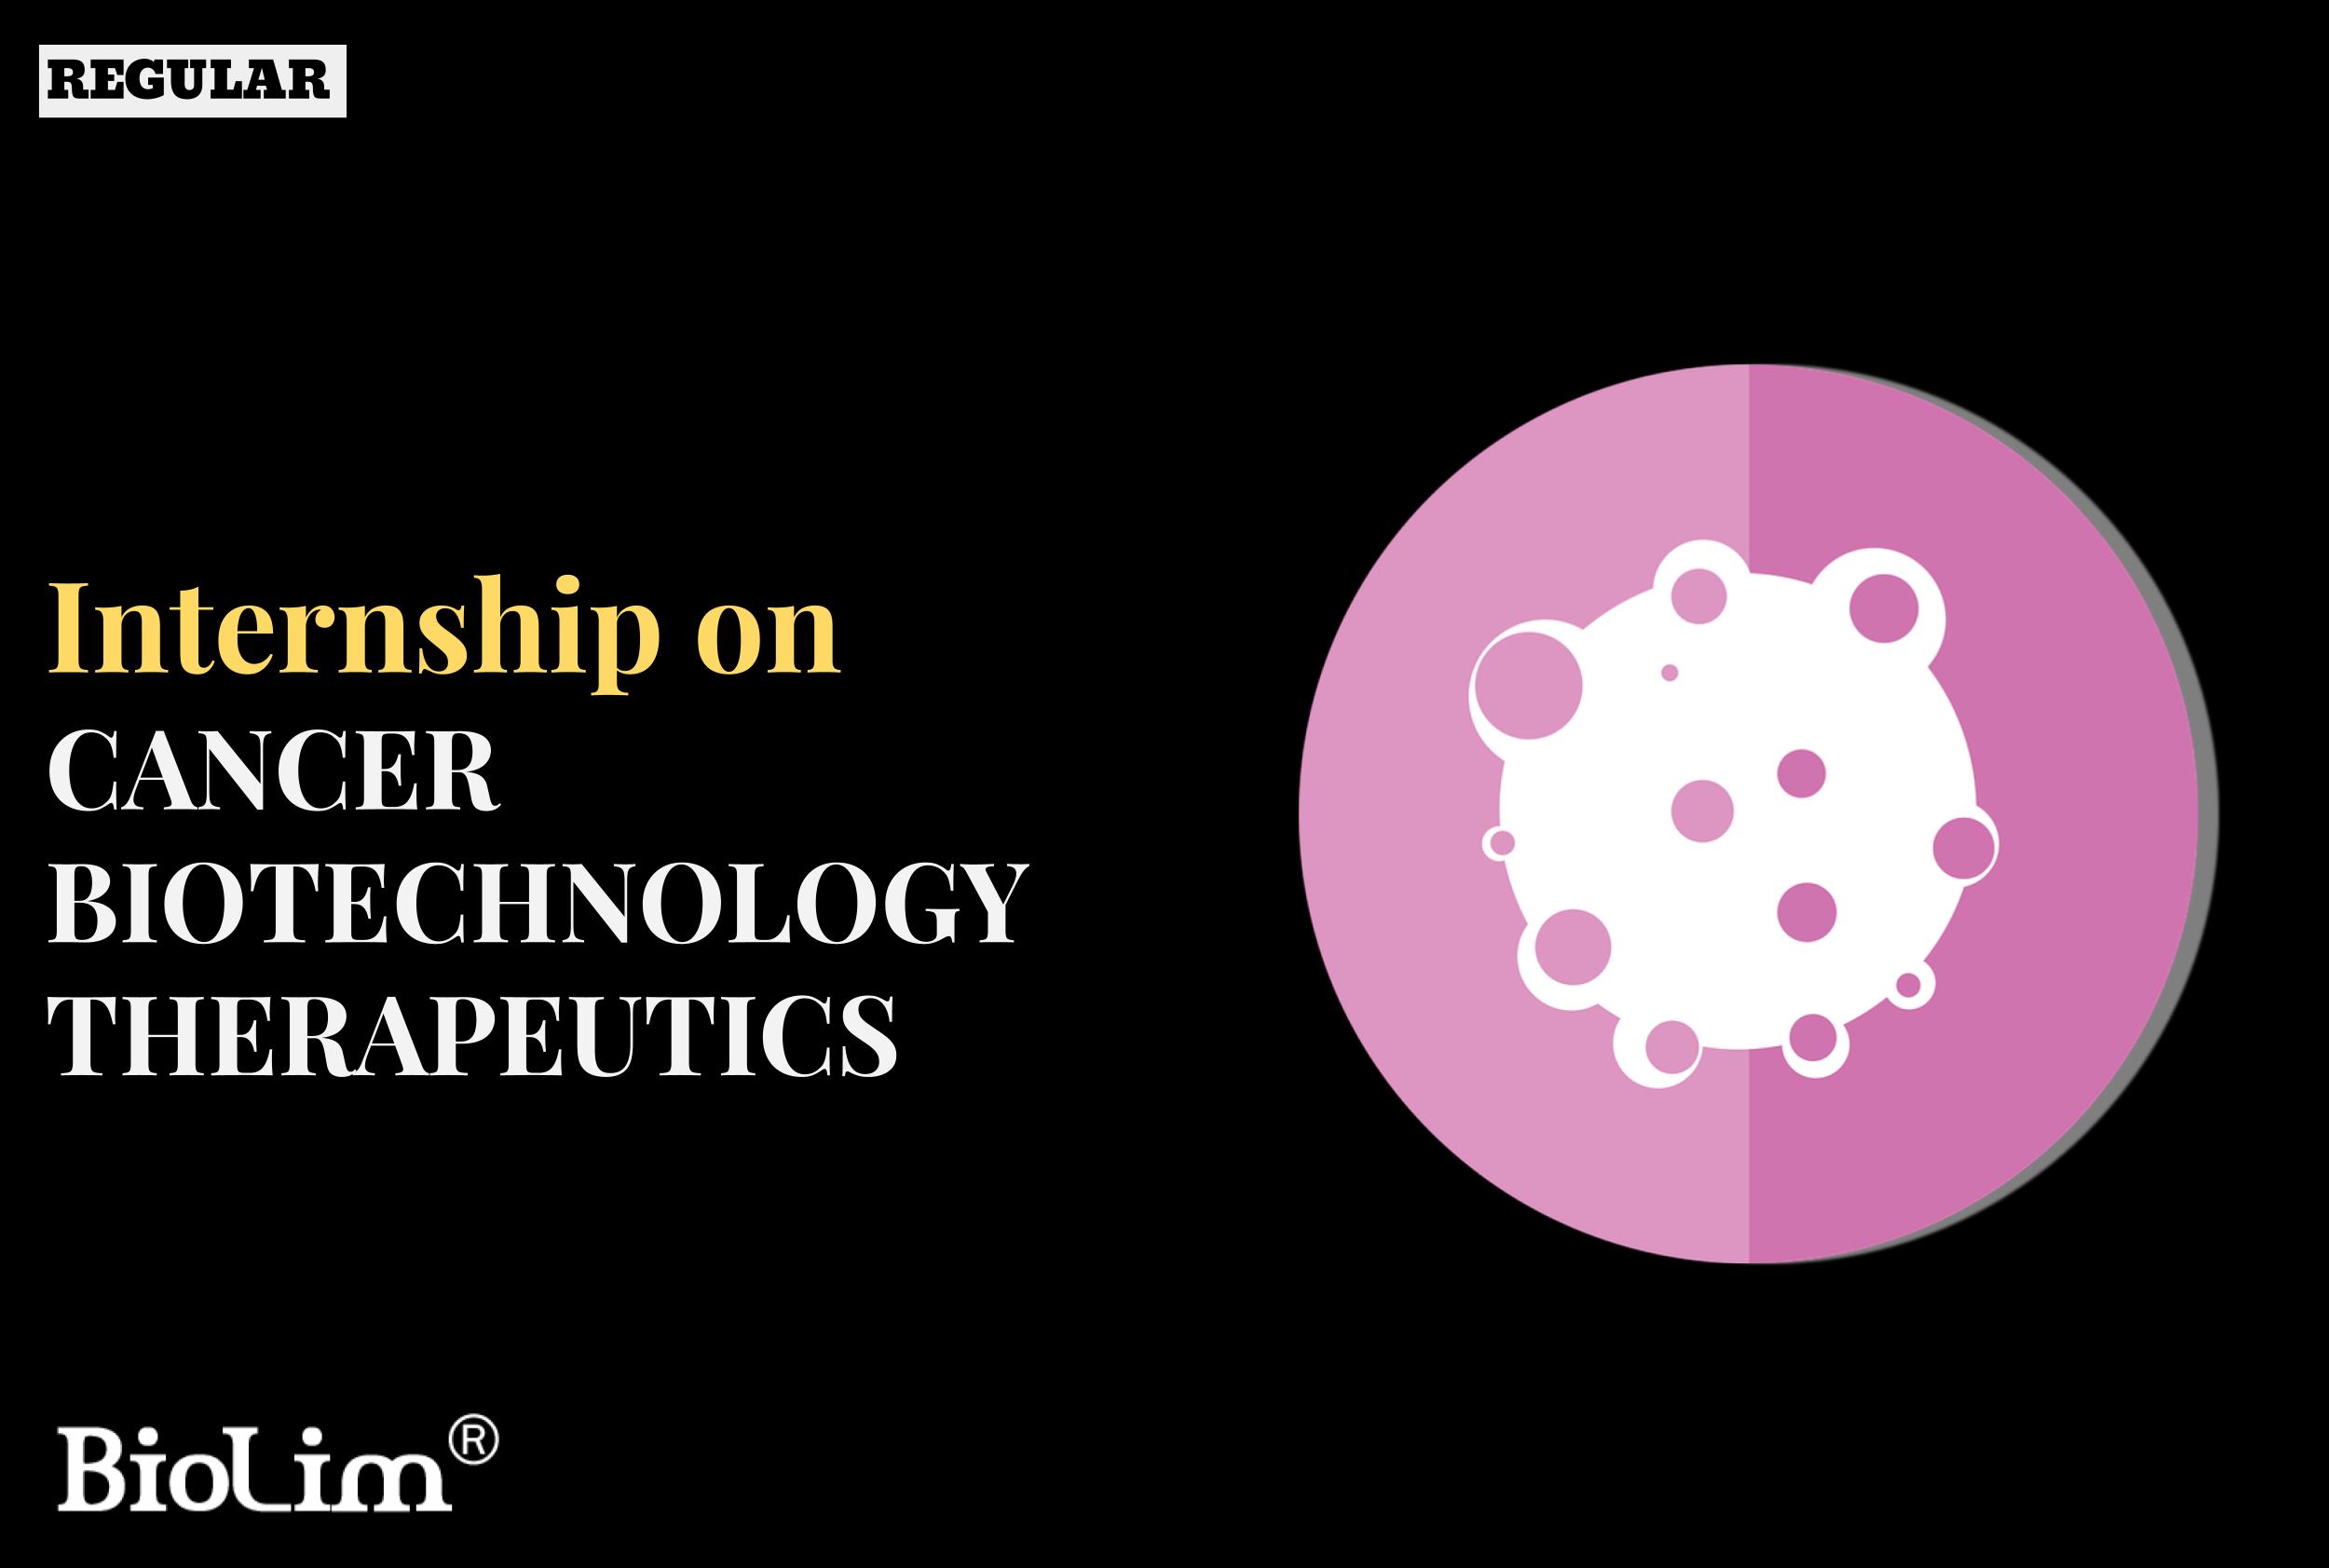 Internship on cancer biotechnology therapeutics